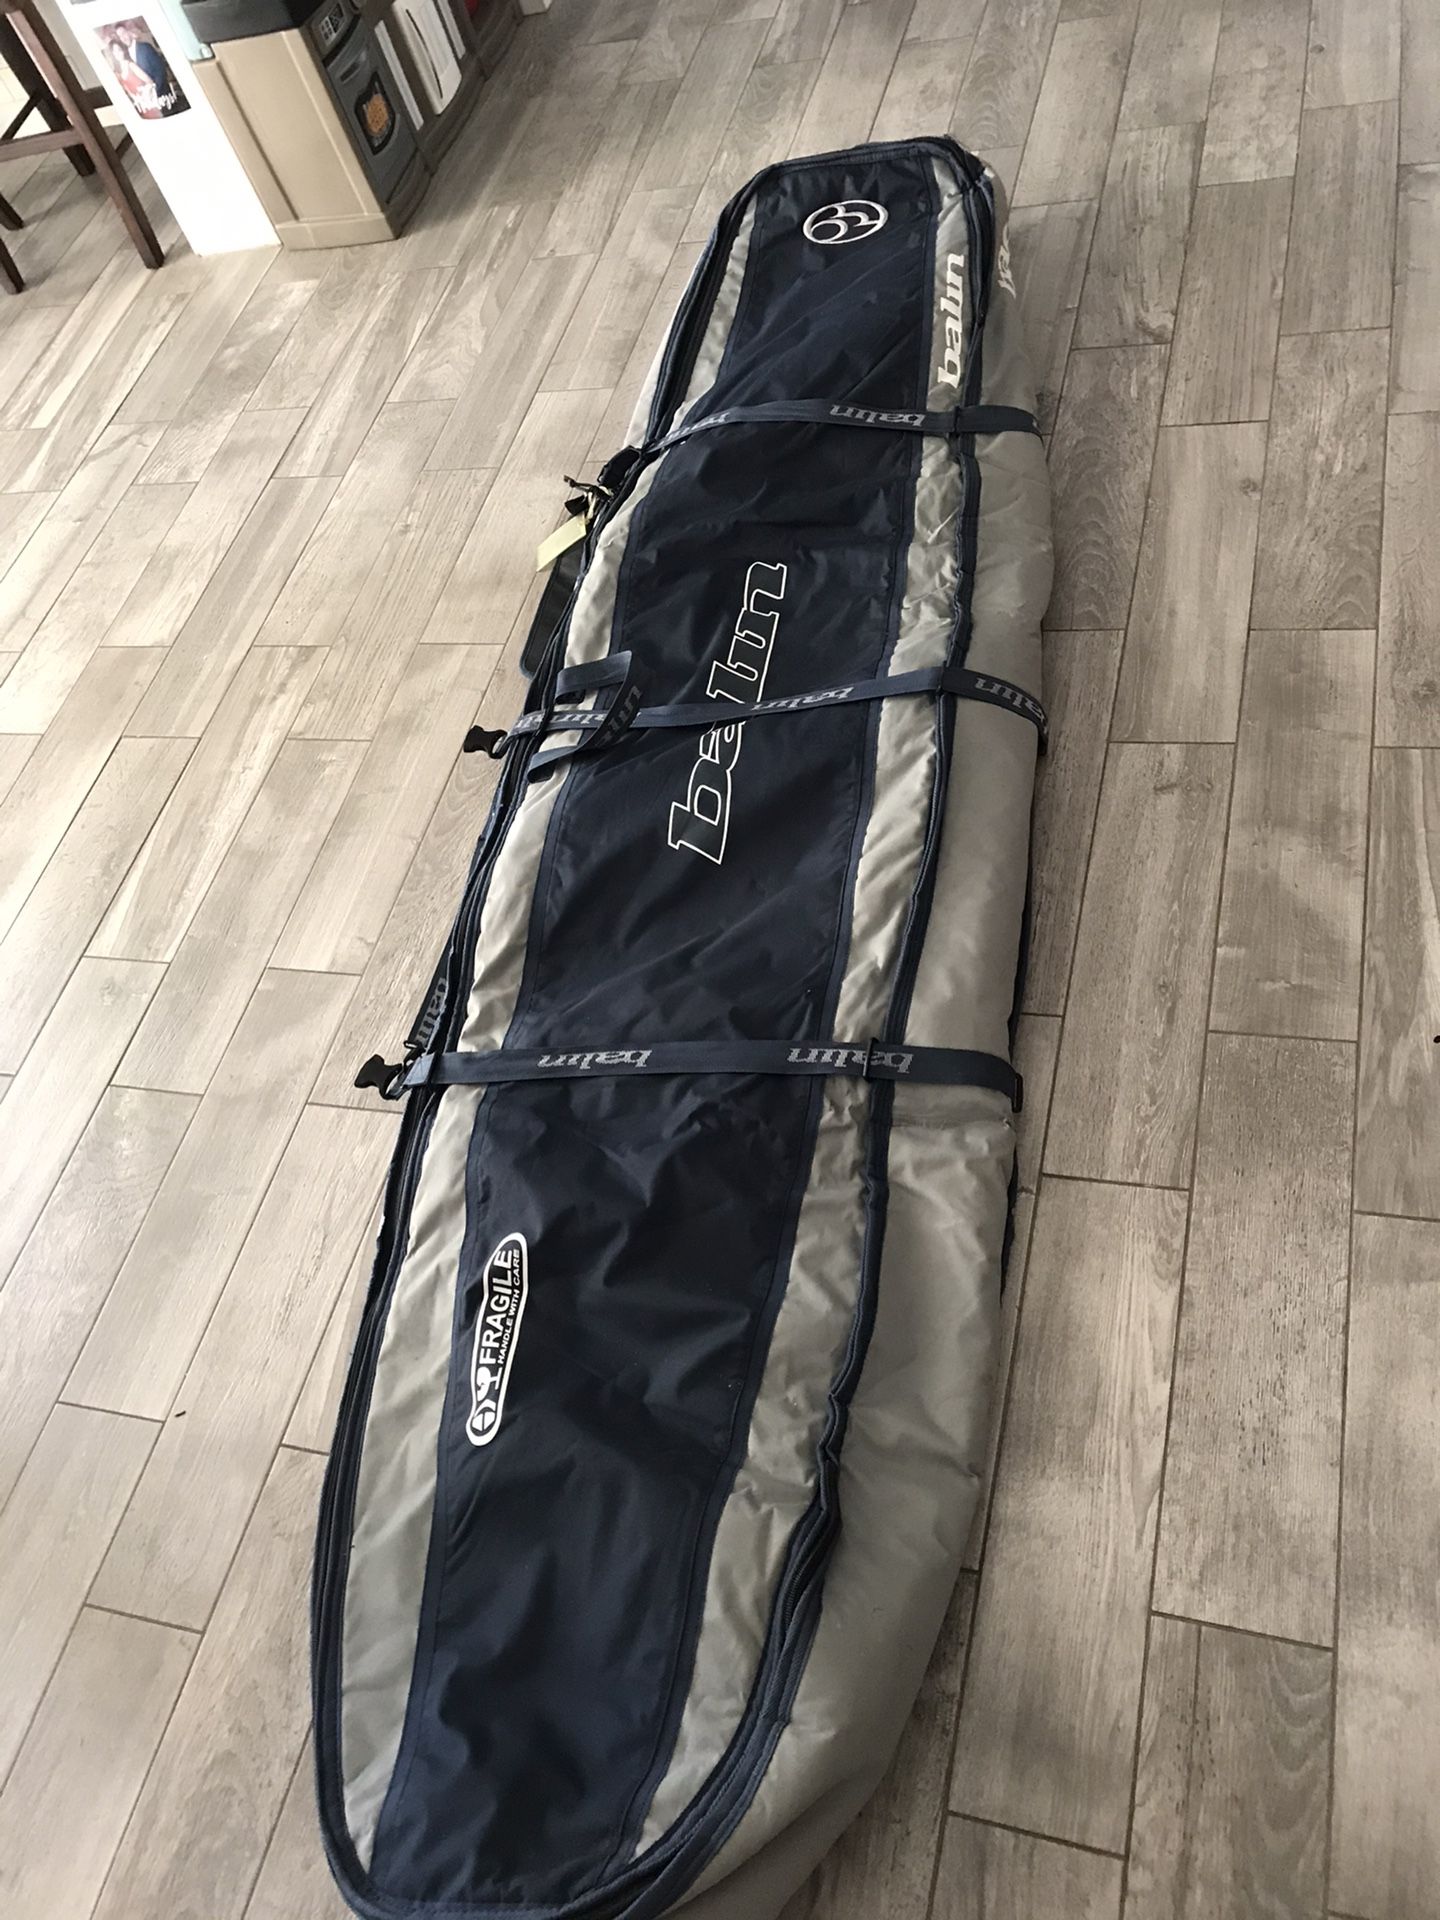 Balin 8ft surfboard travel bag